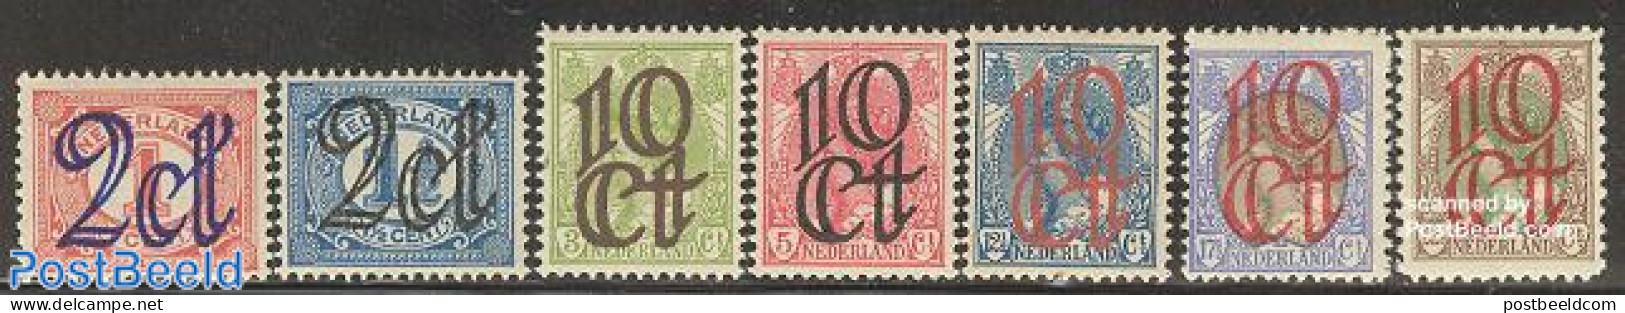 Netherlands 1923 Overprints 7v, Unused (hinged) - Unused Stamps